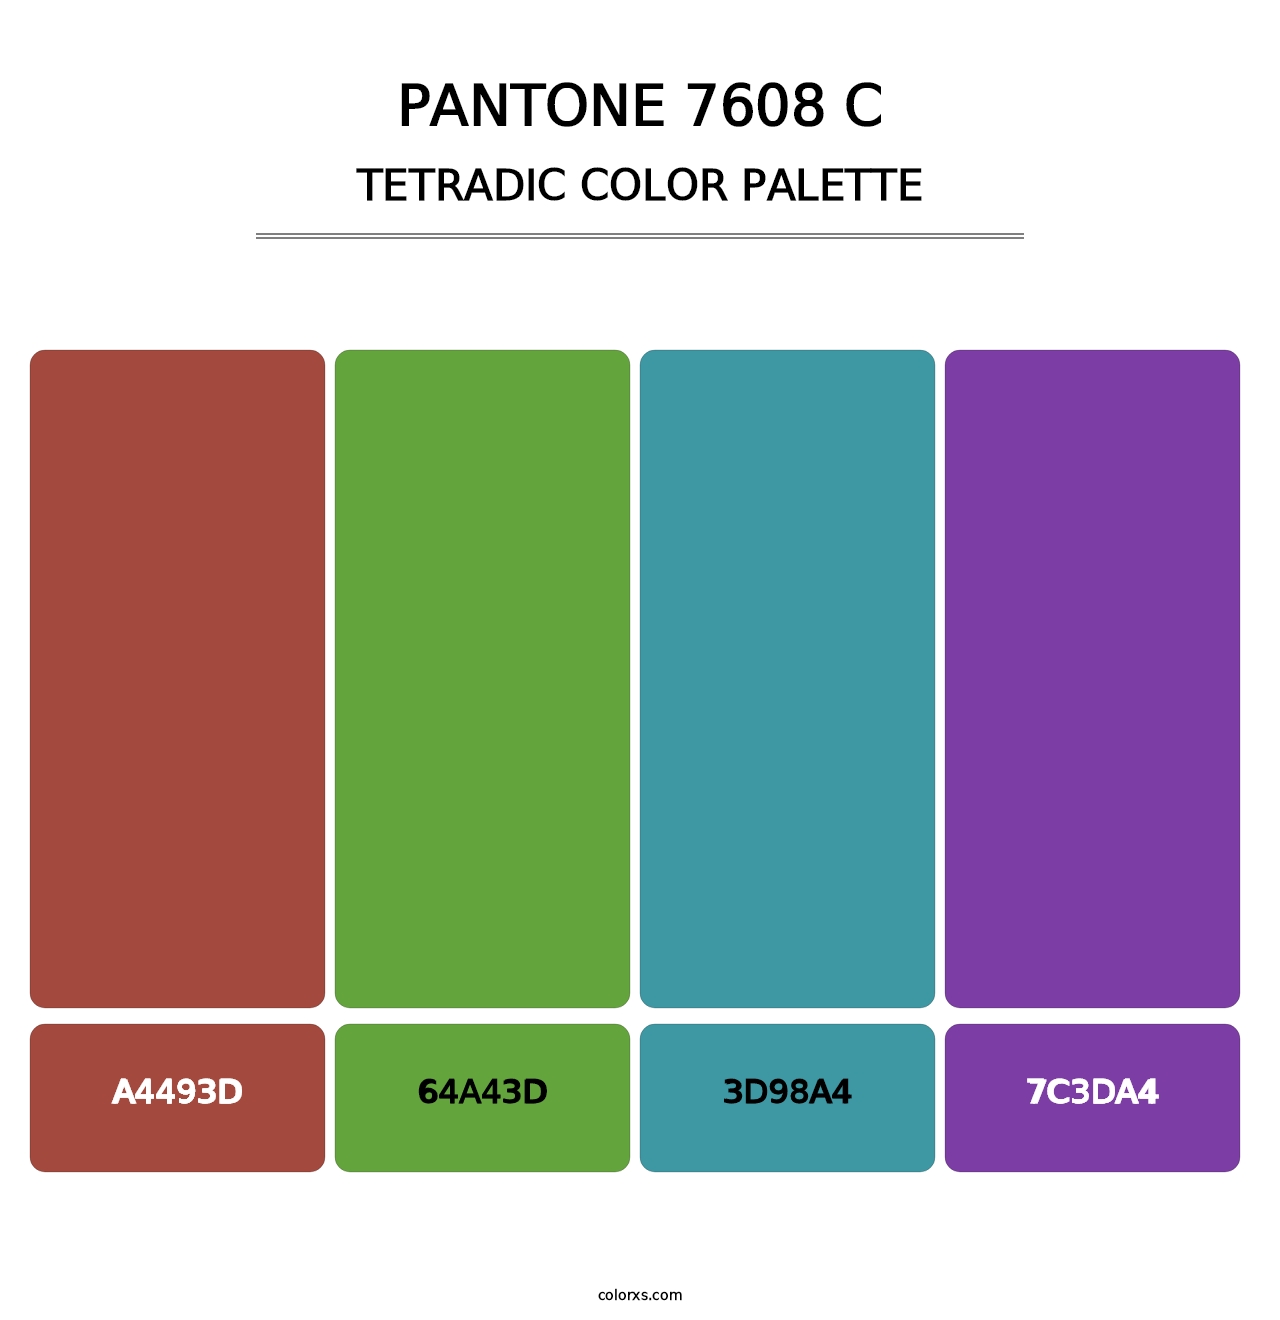 PANTONE 7608 C - Tetradic Color Palette